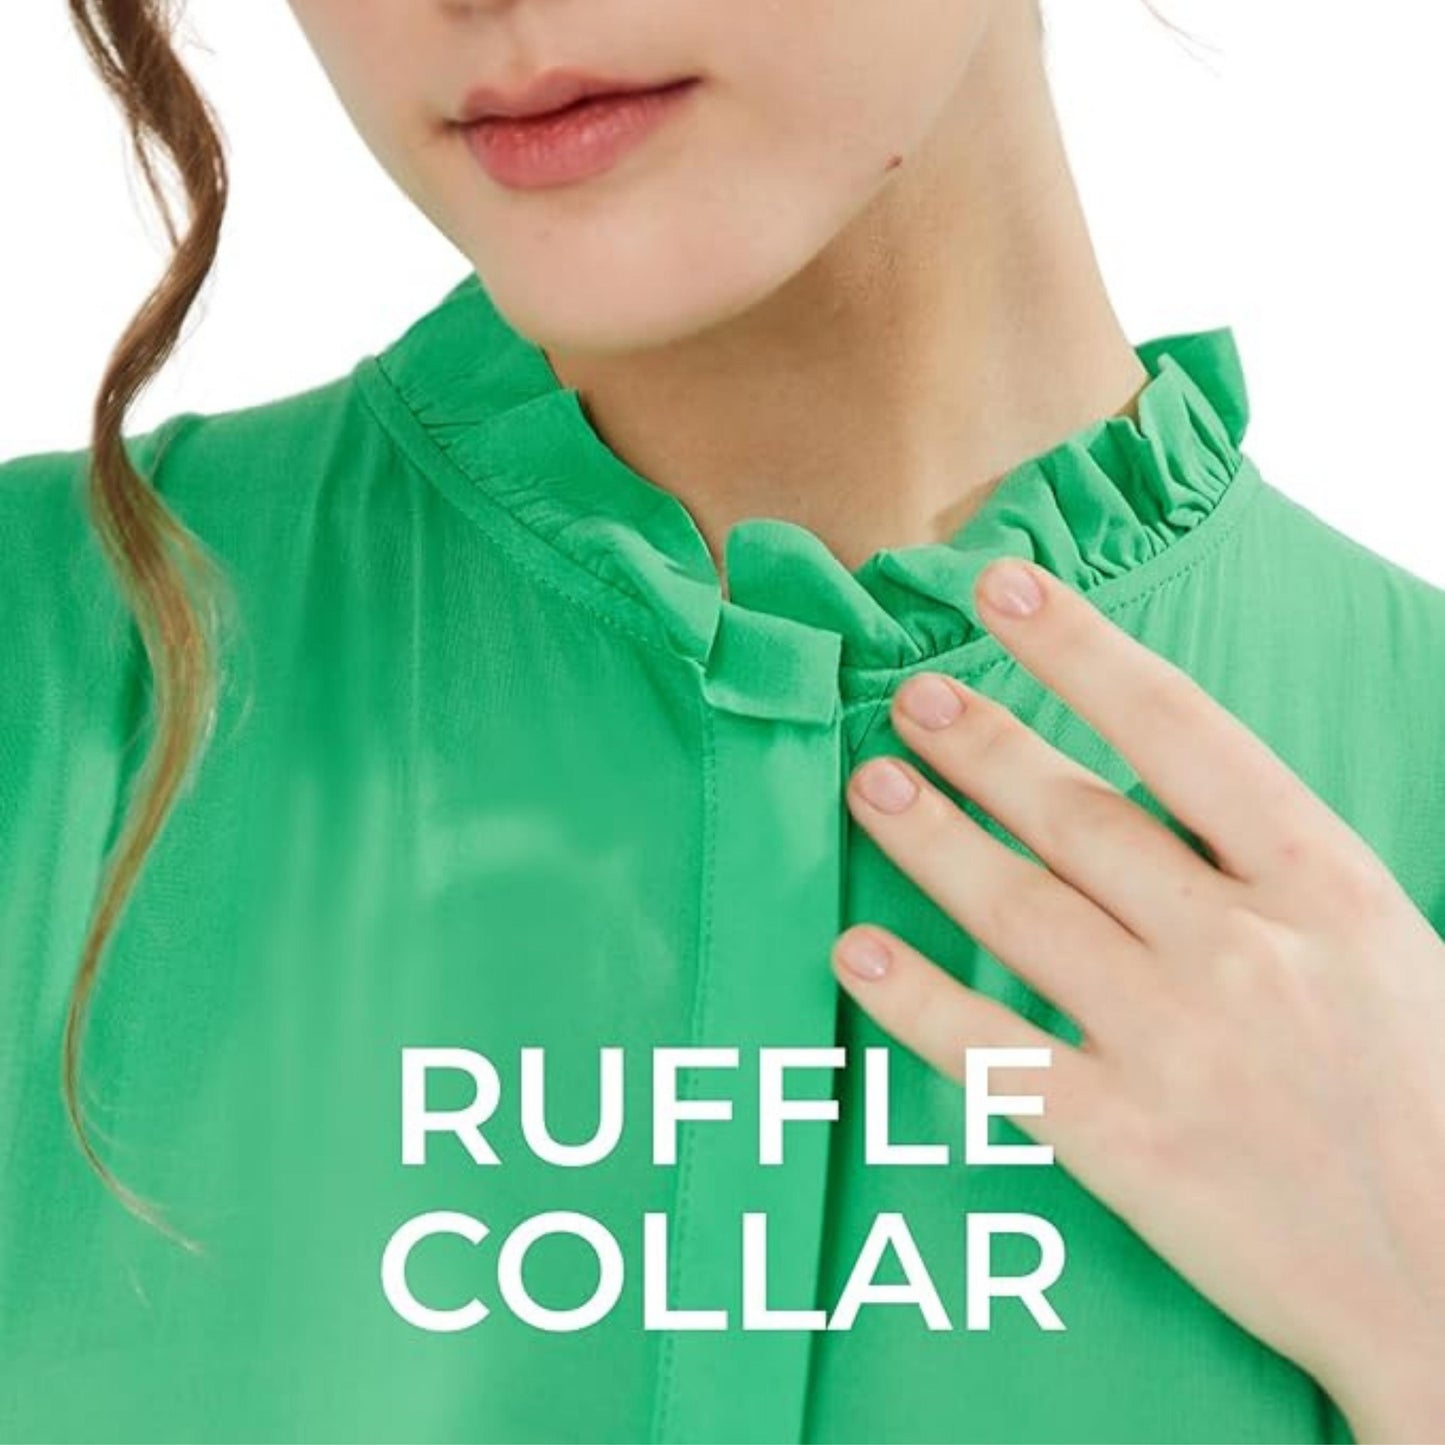 SANDY & SID Women Shirt Dress Sleeveless Hidden Button Closure Ruffle Collar Loose Fit Ankle Length Casual Summer Fall Outfit Green Mint